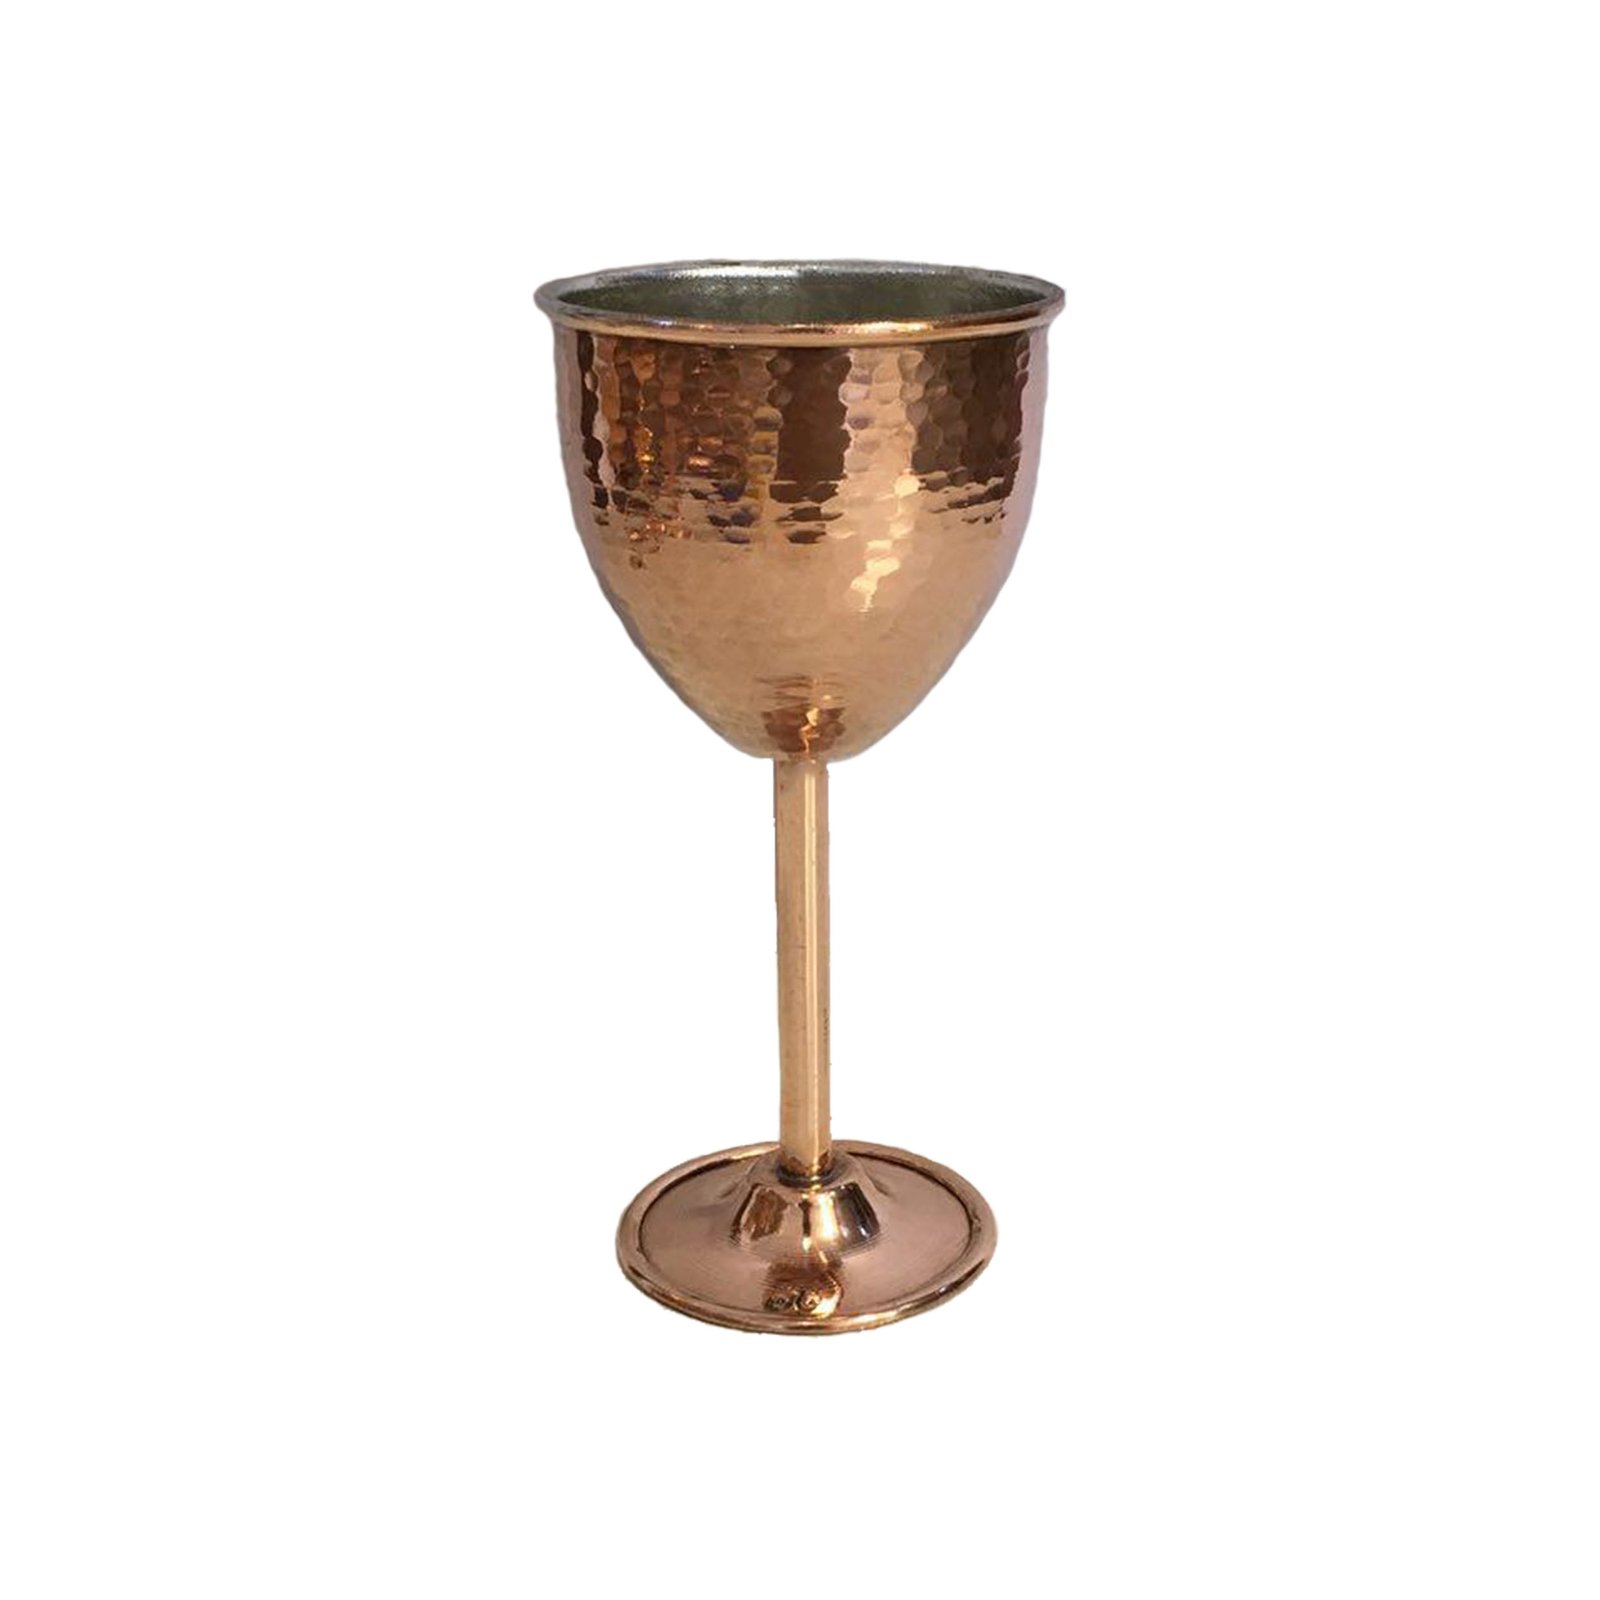 Handicraft Copper cup code c set 12 pcs, pris på koppargryta, kopparkrukspris